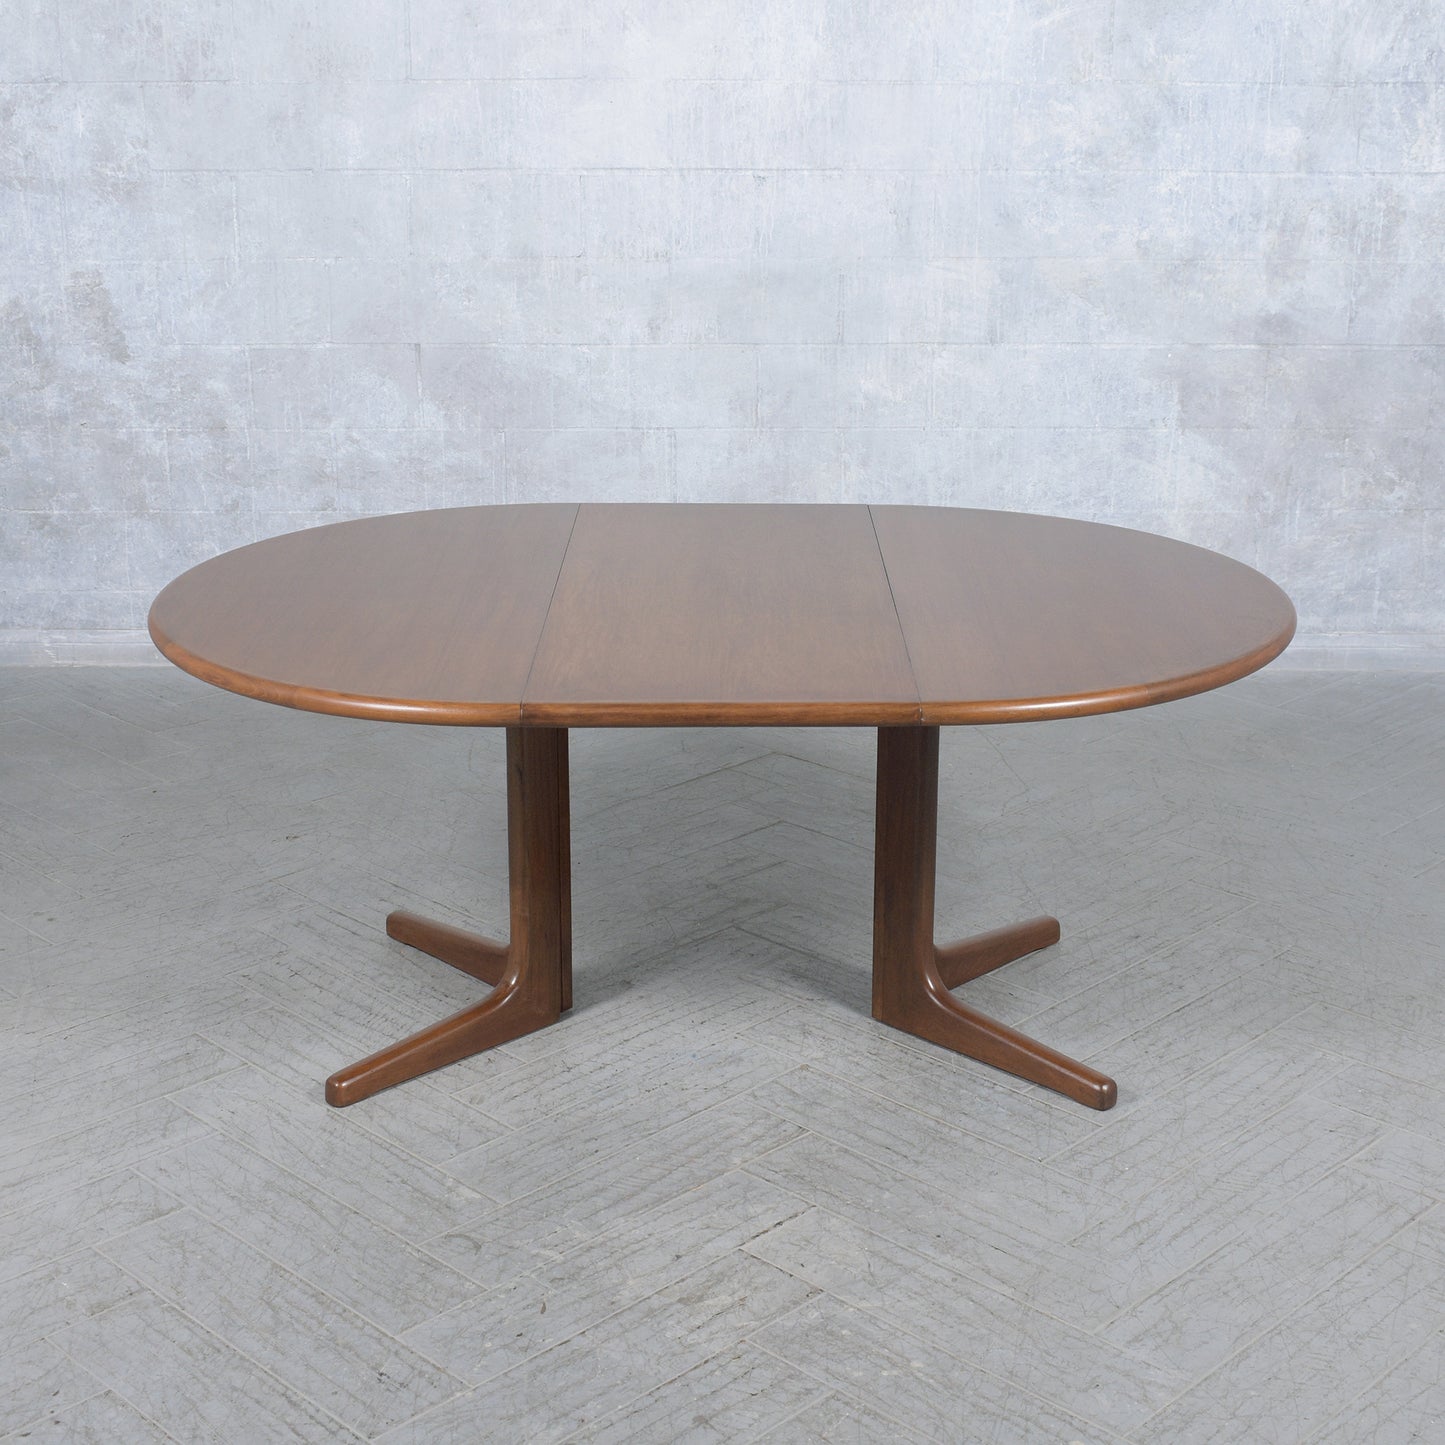 Vintage Danish Modern Teak Extendable Dining Table